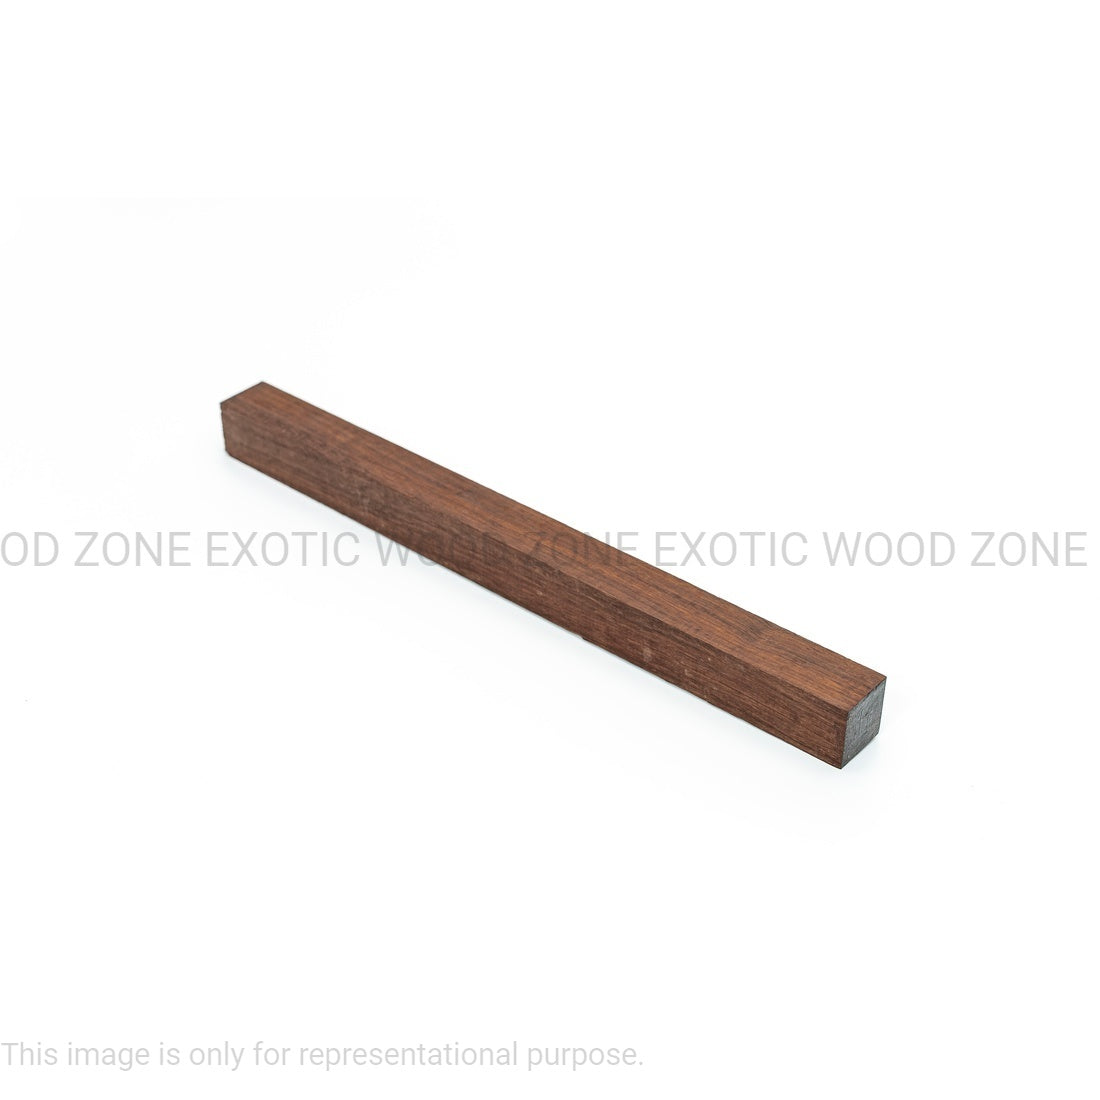 Granadillo Hobby Wood/ Turning Wood Blanks 1 x 1 x 12 inches